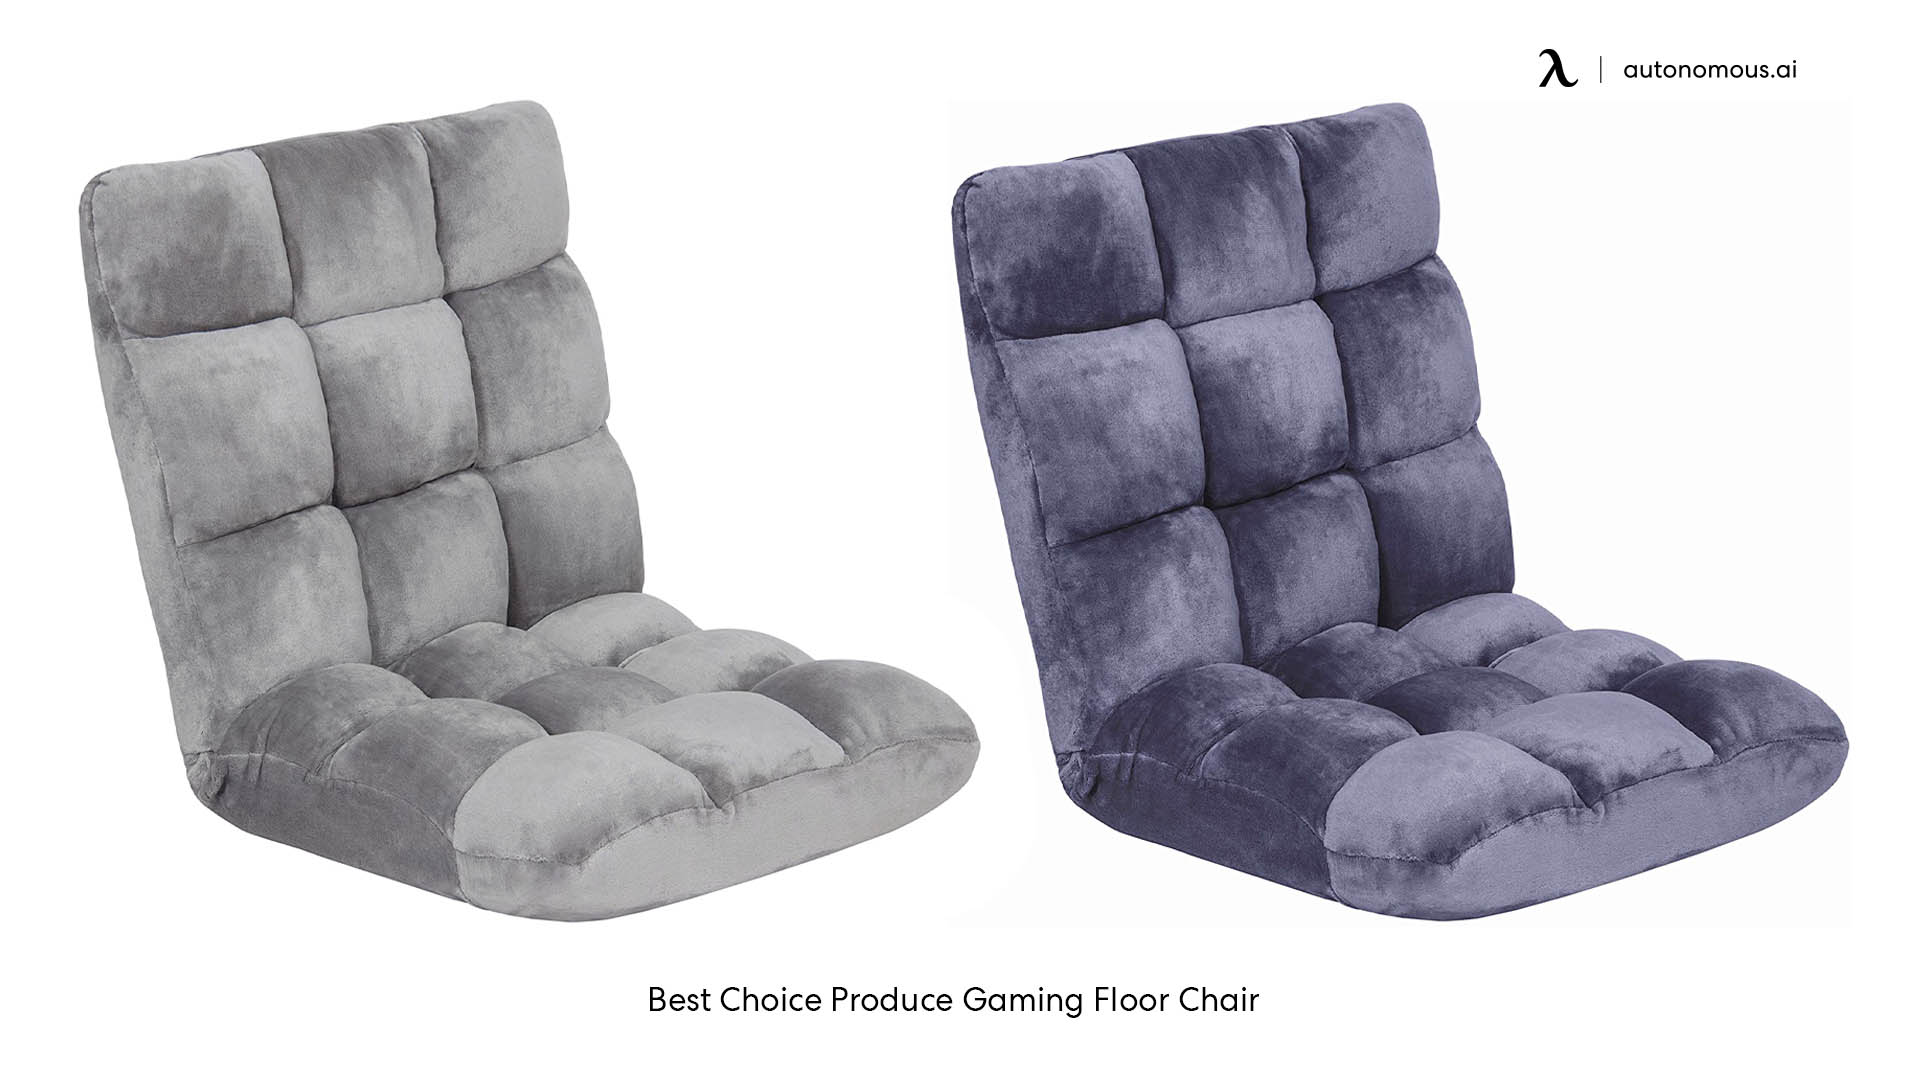 Best Choice Produce Gaming Floor Chair